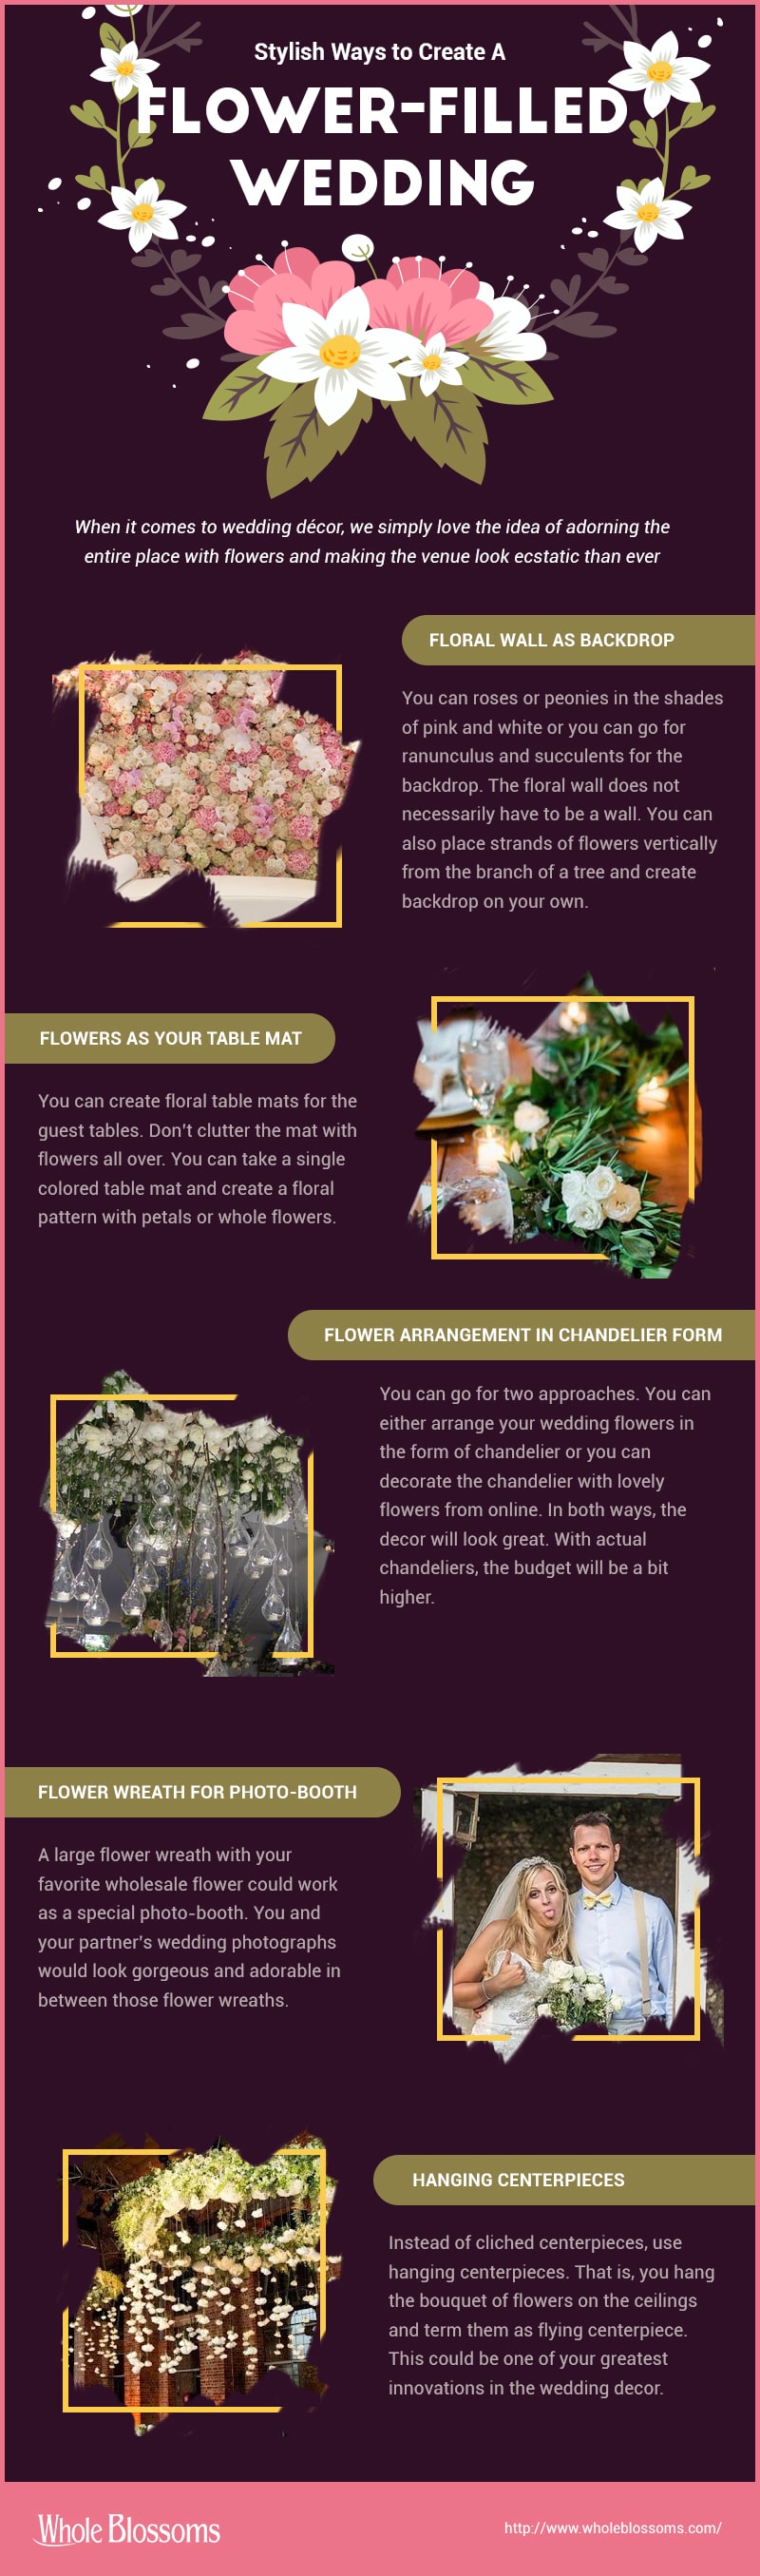 Stylish Ways to Create A Lush, Flower-Filled Wedding